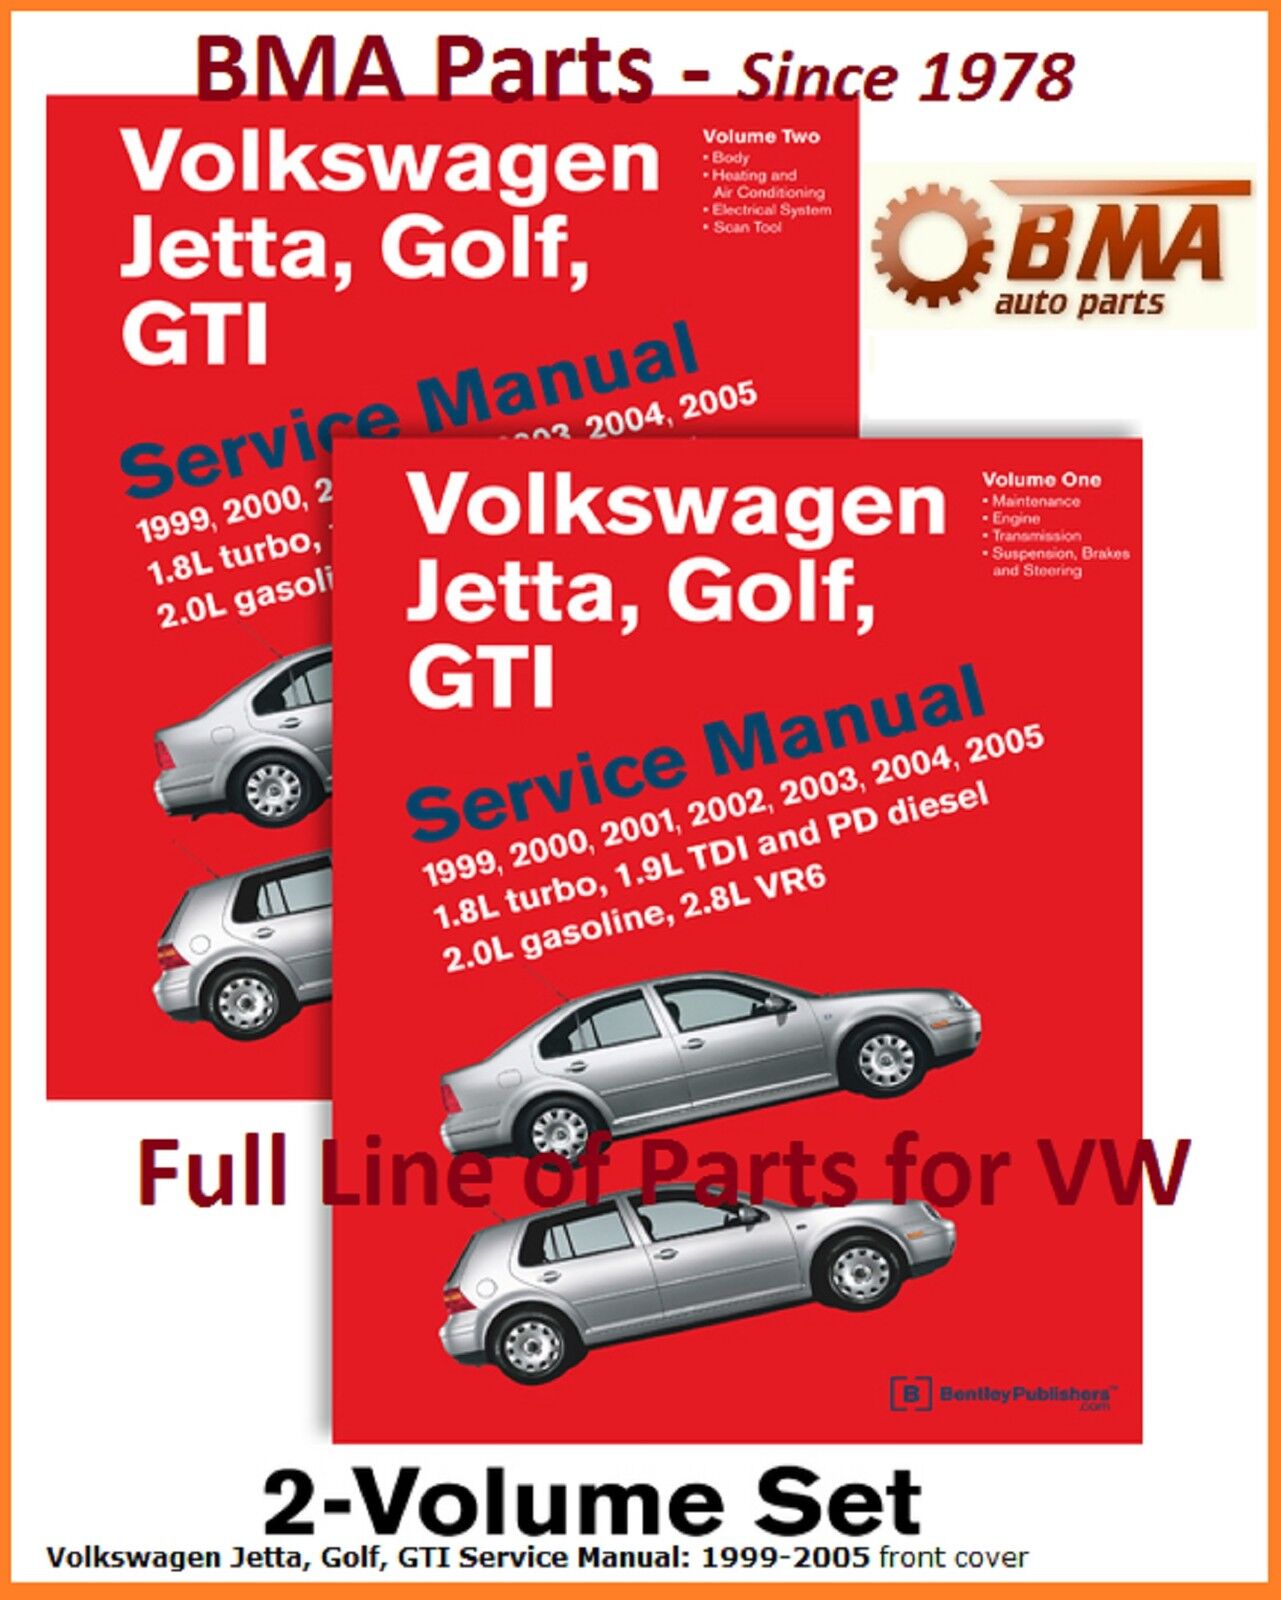 NEW VOLKSWAGEN VW JETTA GOLF GTI 1999-2005 BENTLEY SERVICE REPAIR MANUAL VG05